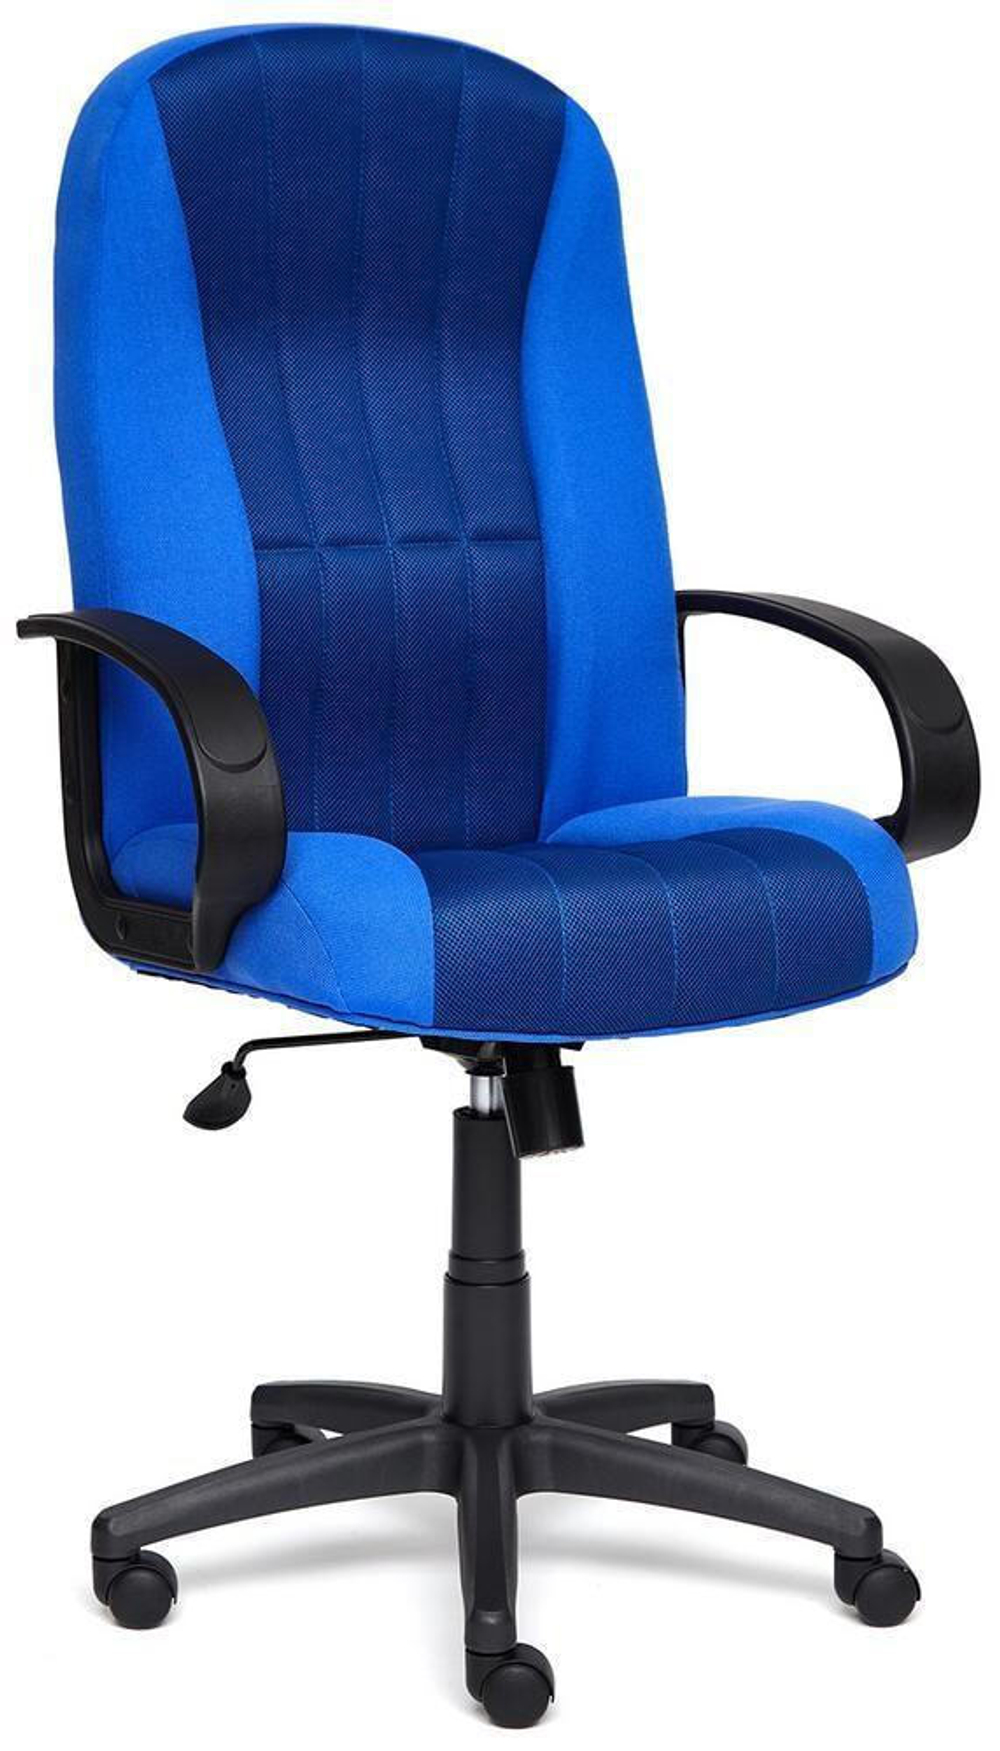 Кресло СН833